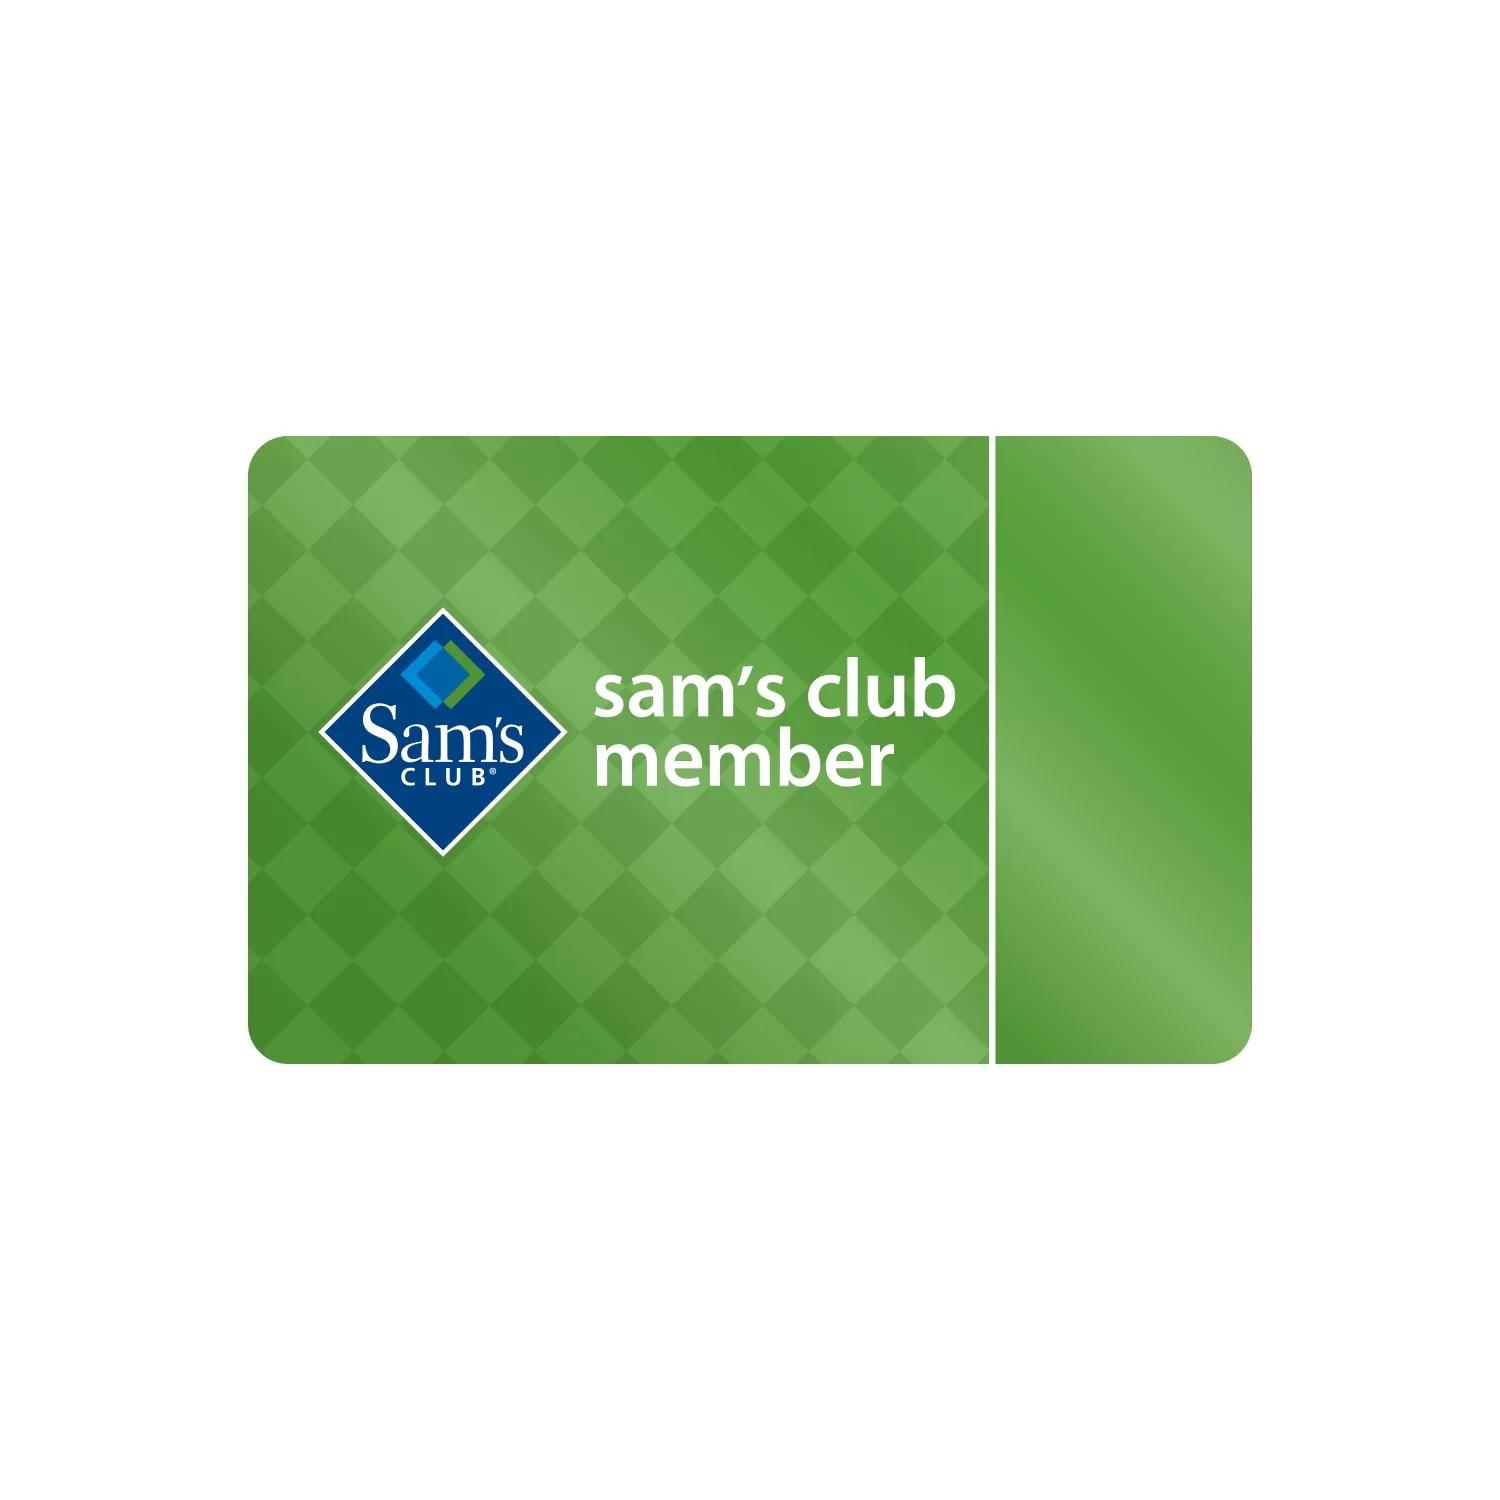 Sam's Club membership card 